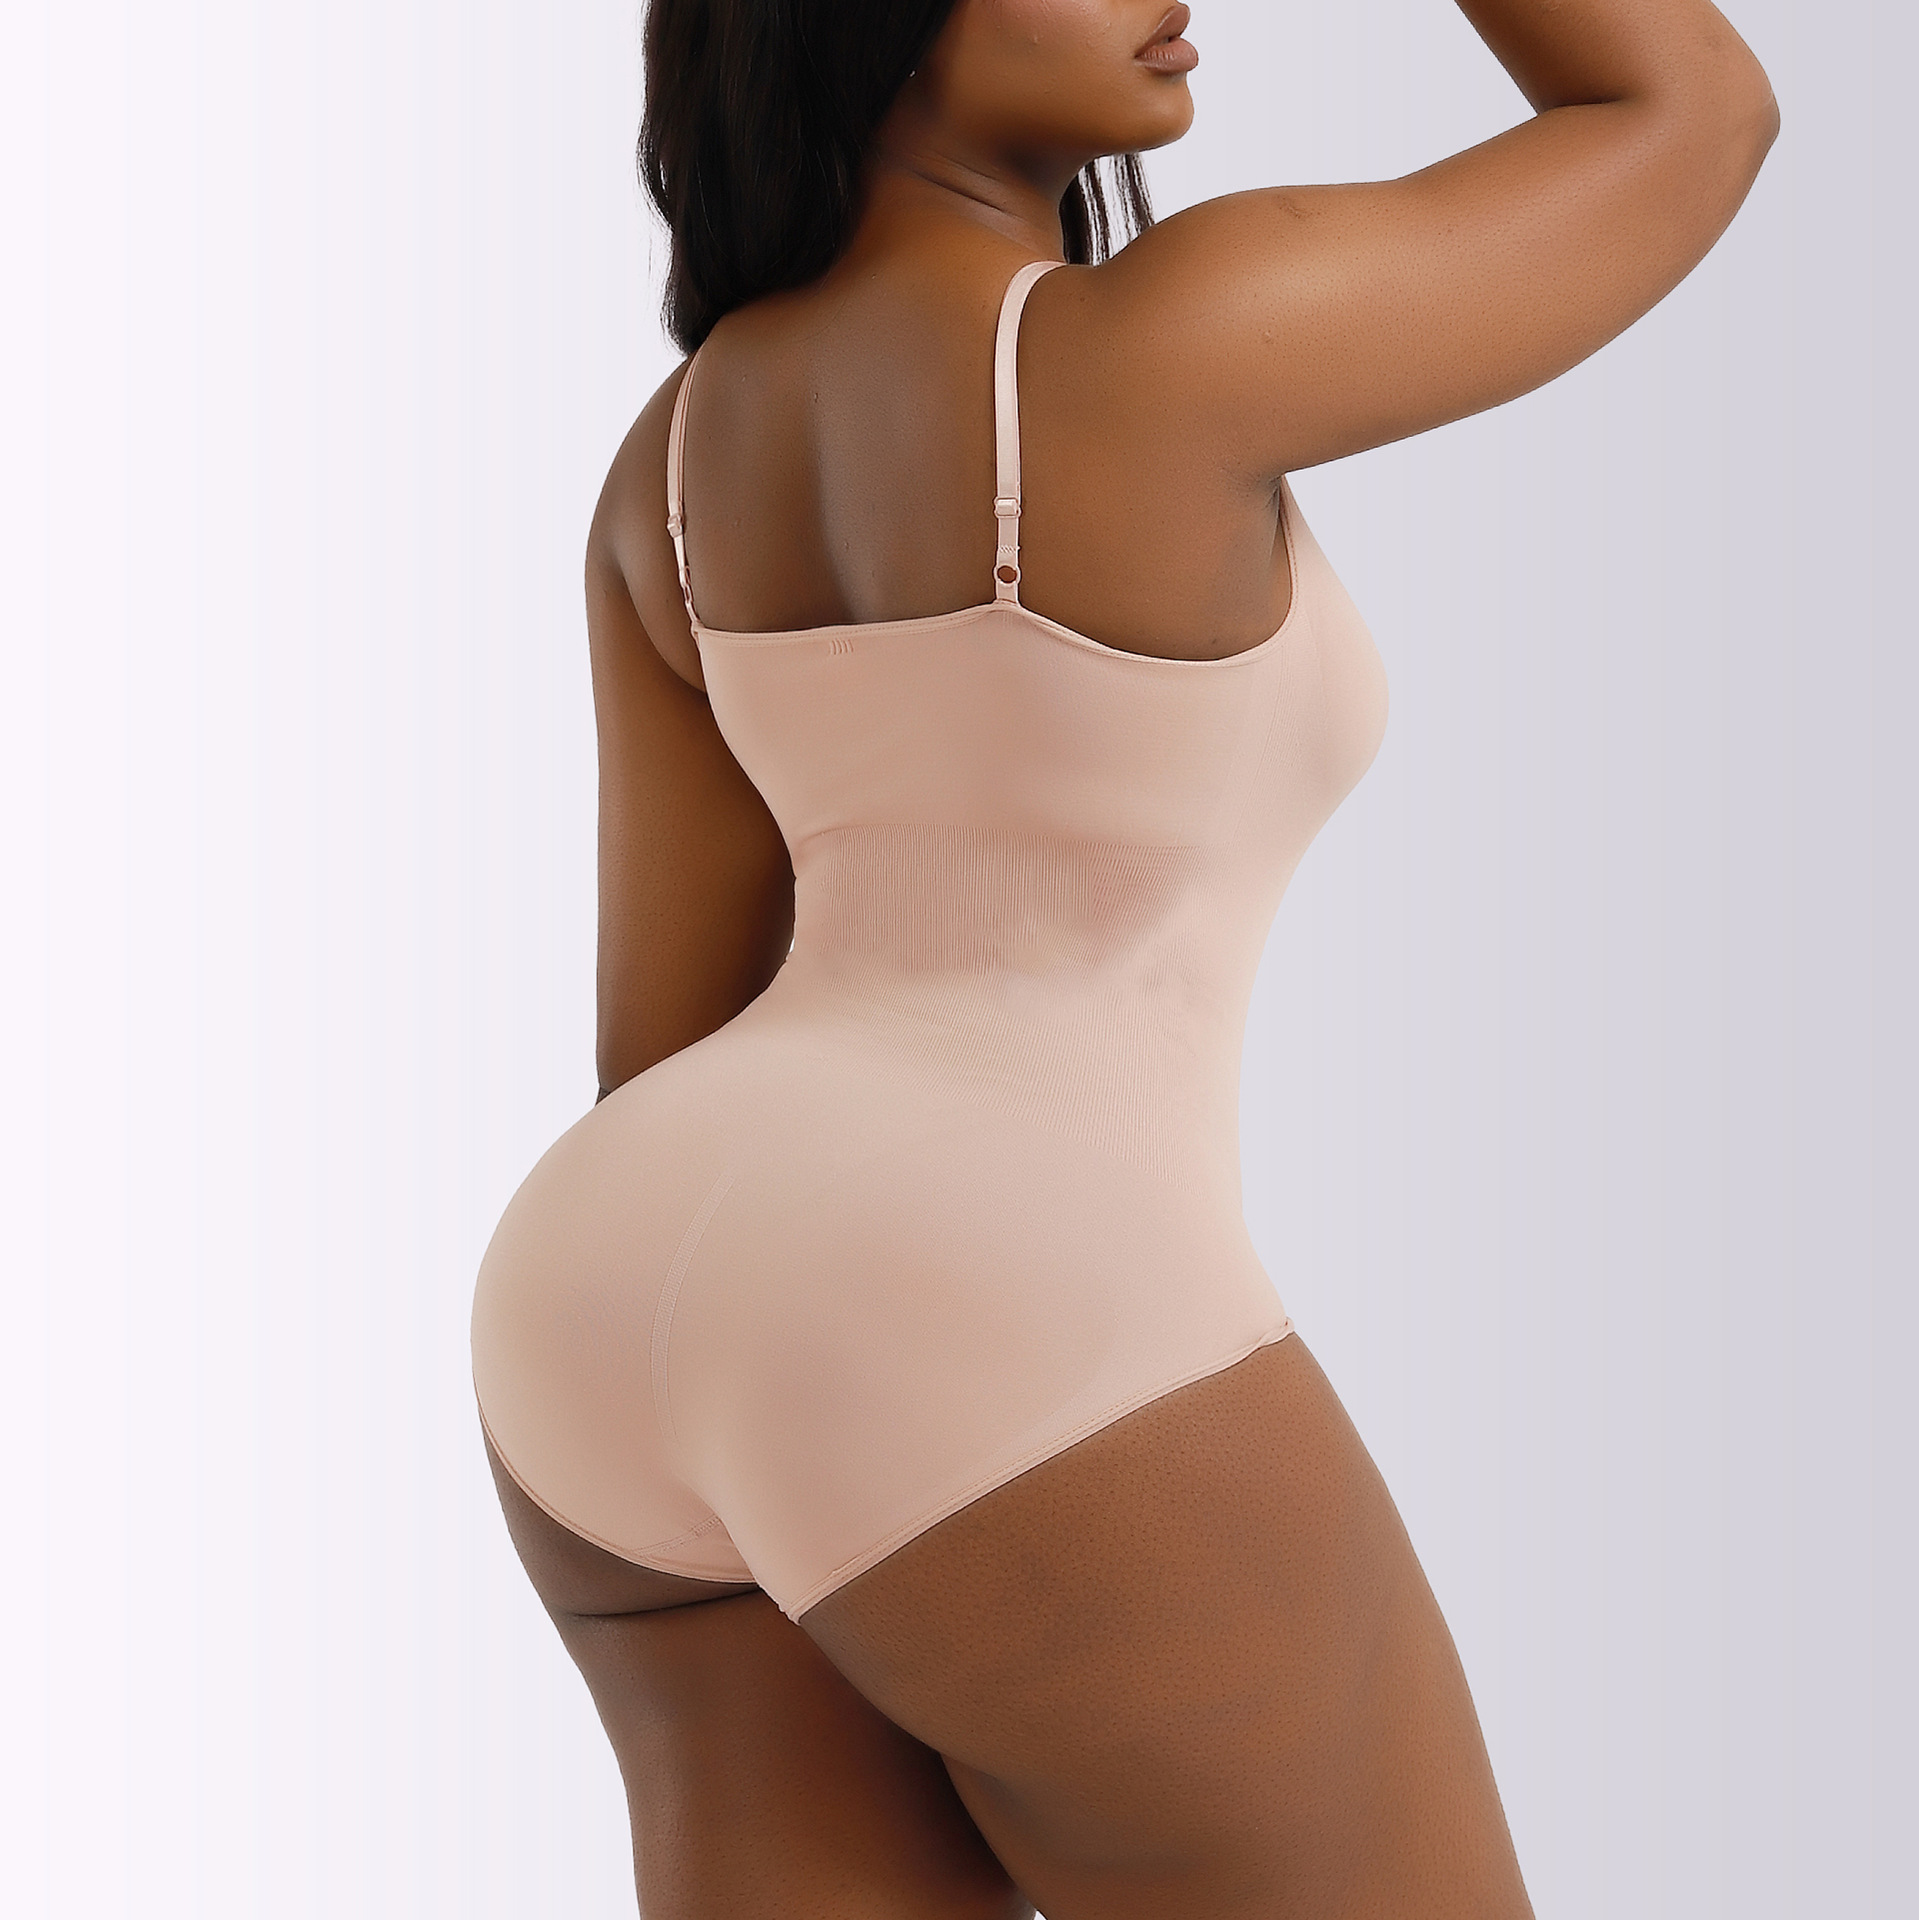 Bodysuit Shapewear Seamless Body Shaper Tummy Control Top Women's Tummy  Slimming - International Society of Hypertension